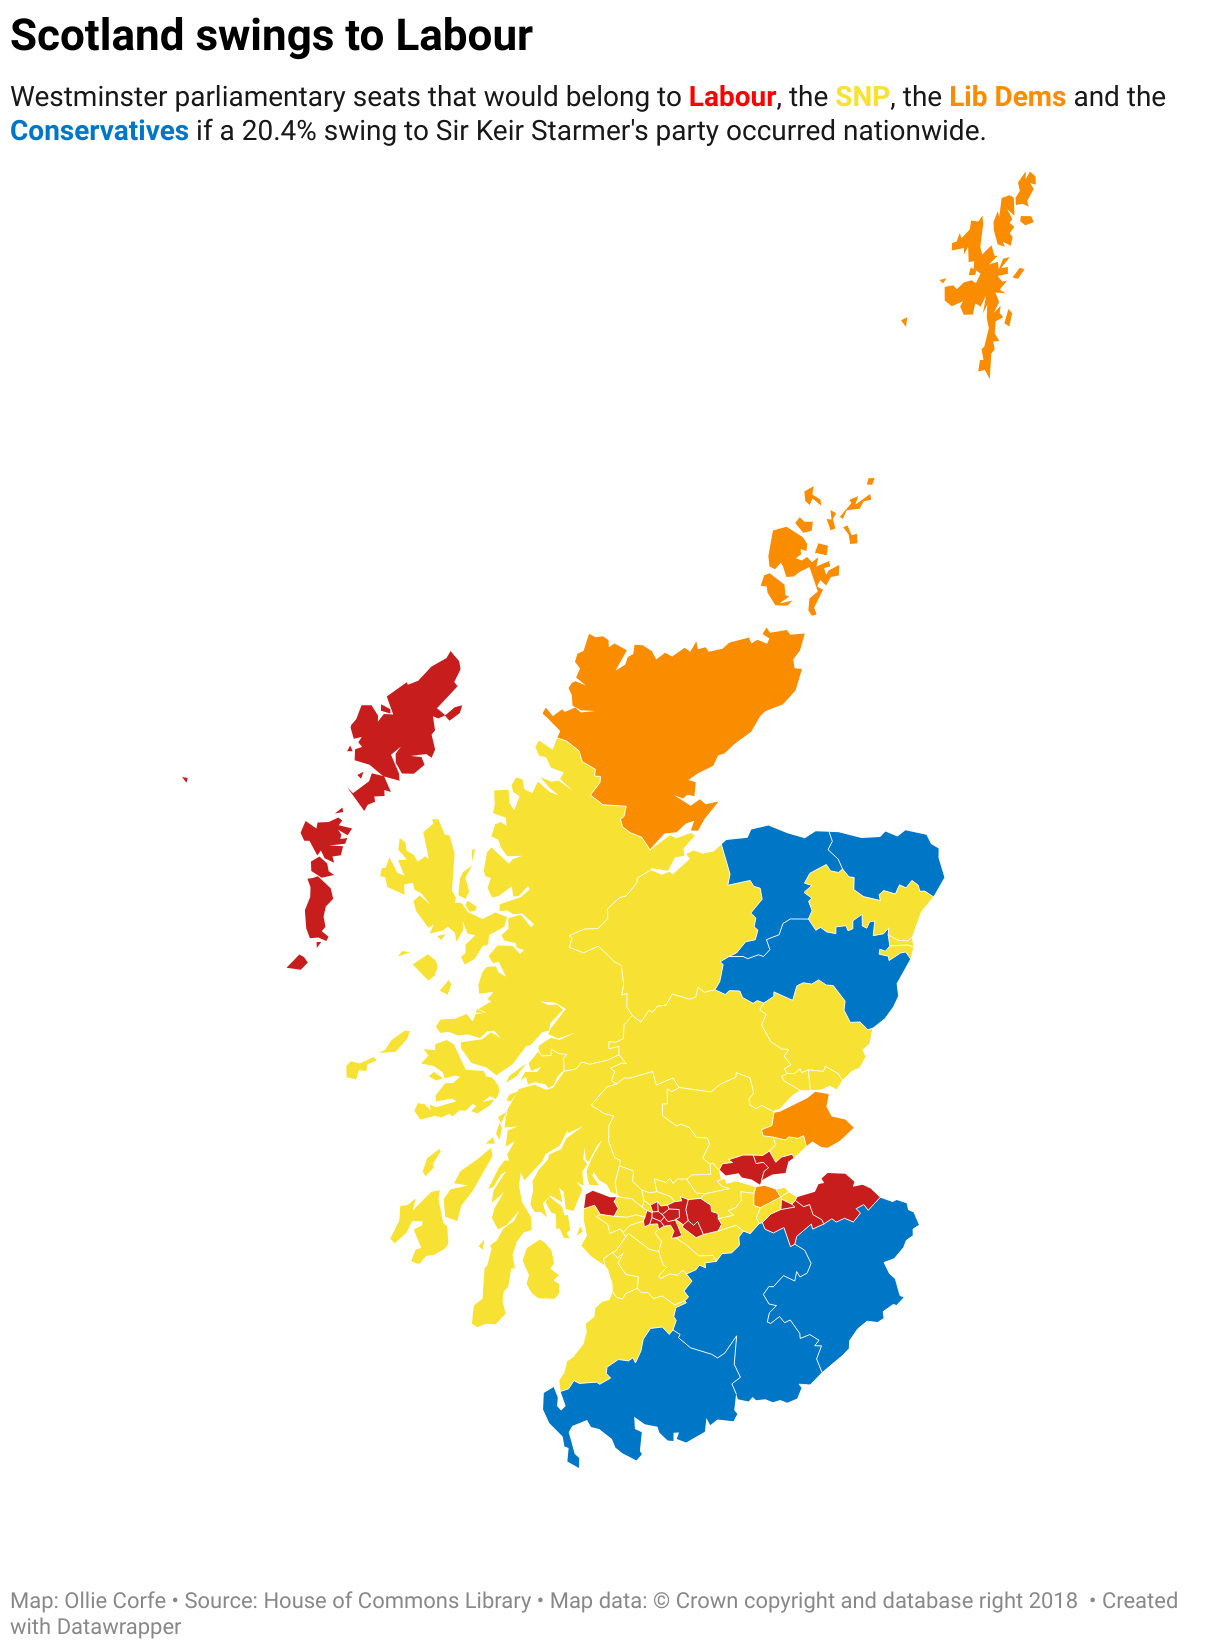 Scottish Labour swing map.